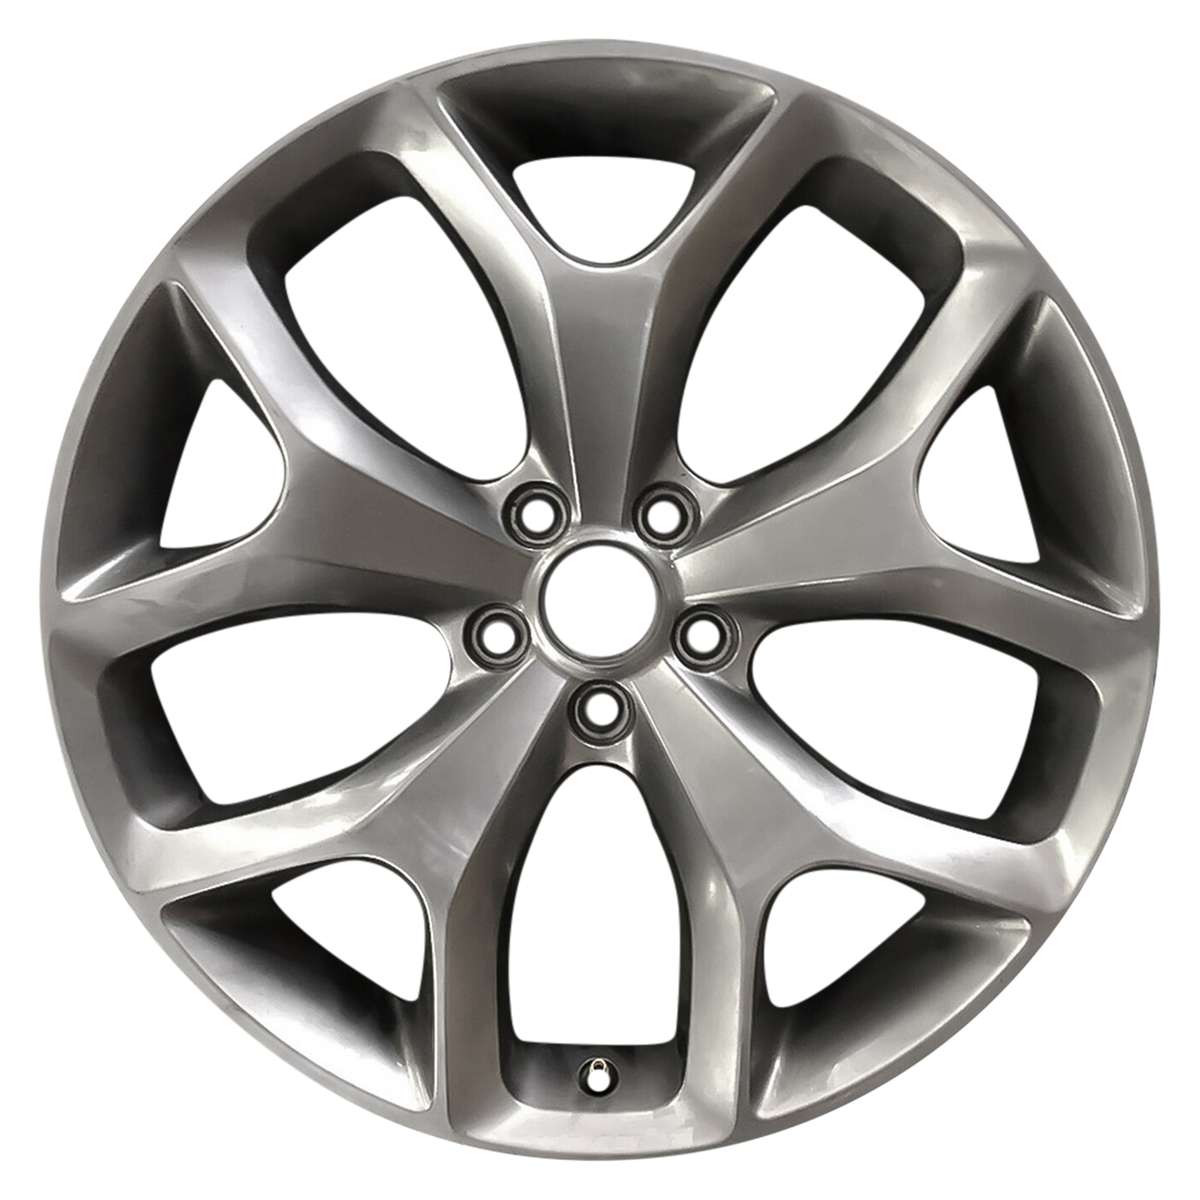 2011 Dodge Charger 20" OEM Wheel Rim W2523LH